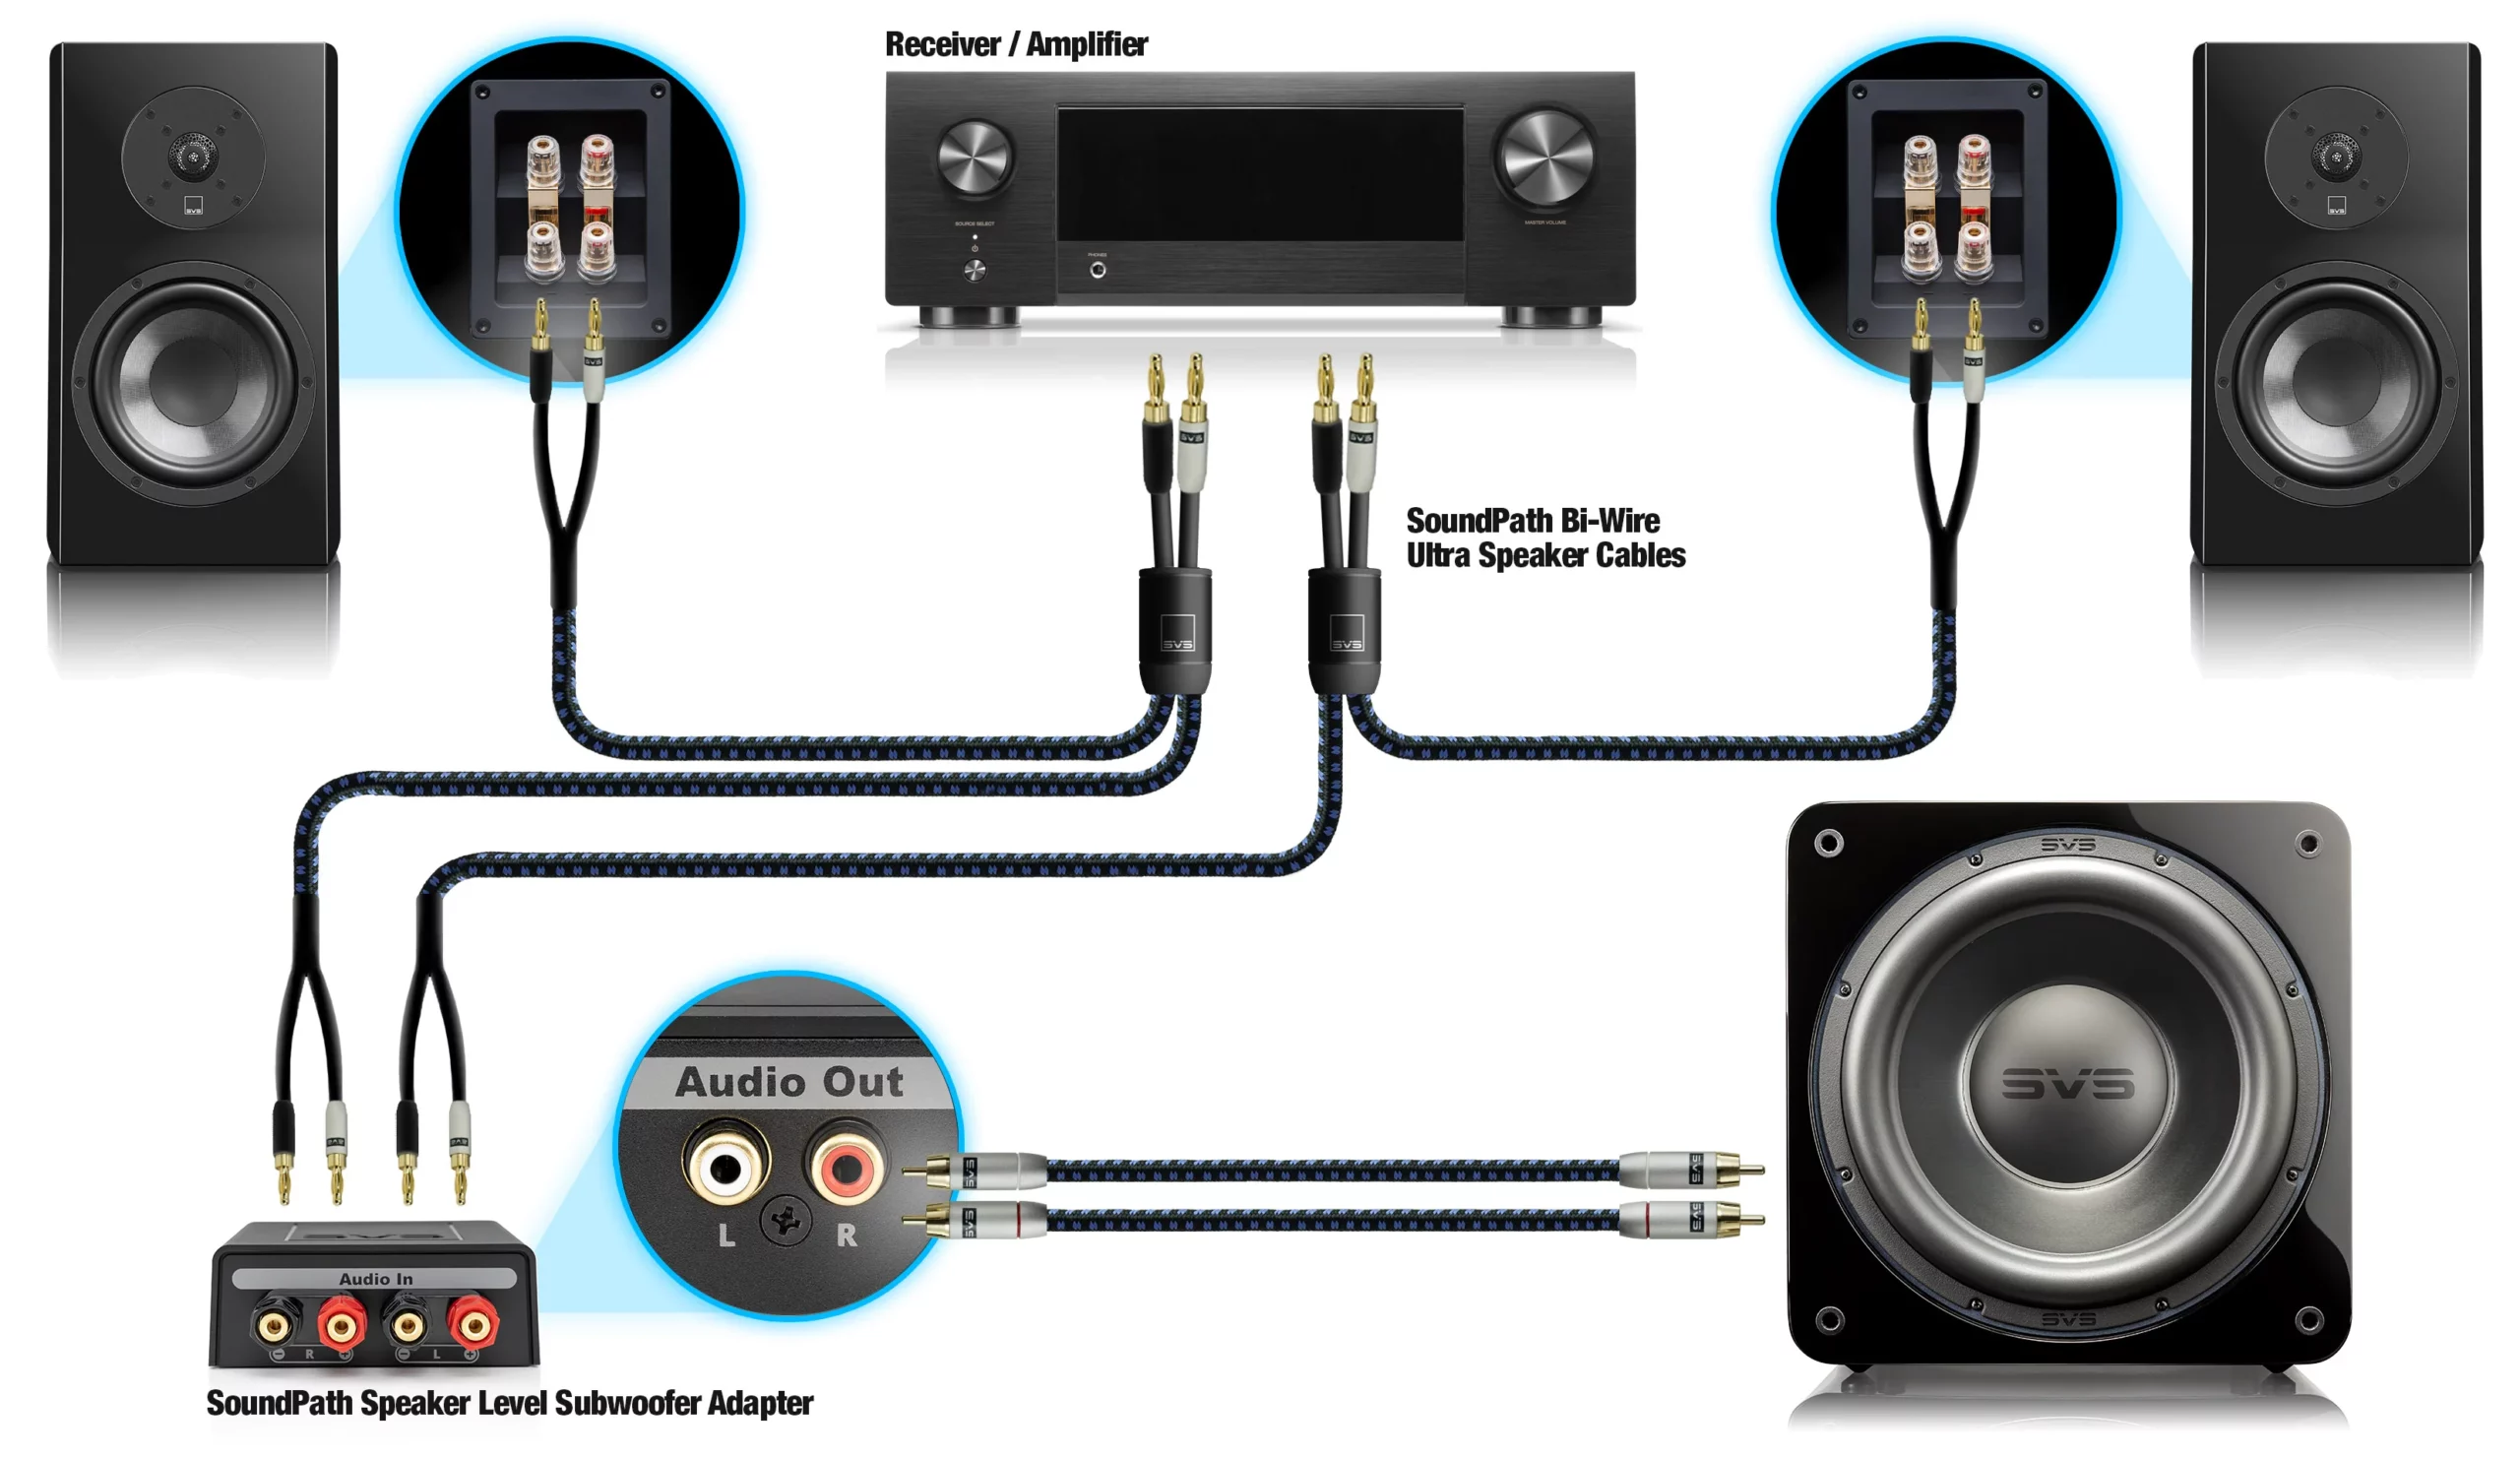 SoundPath Speaker Level Sub Adapter